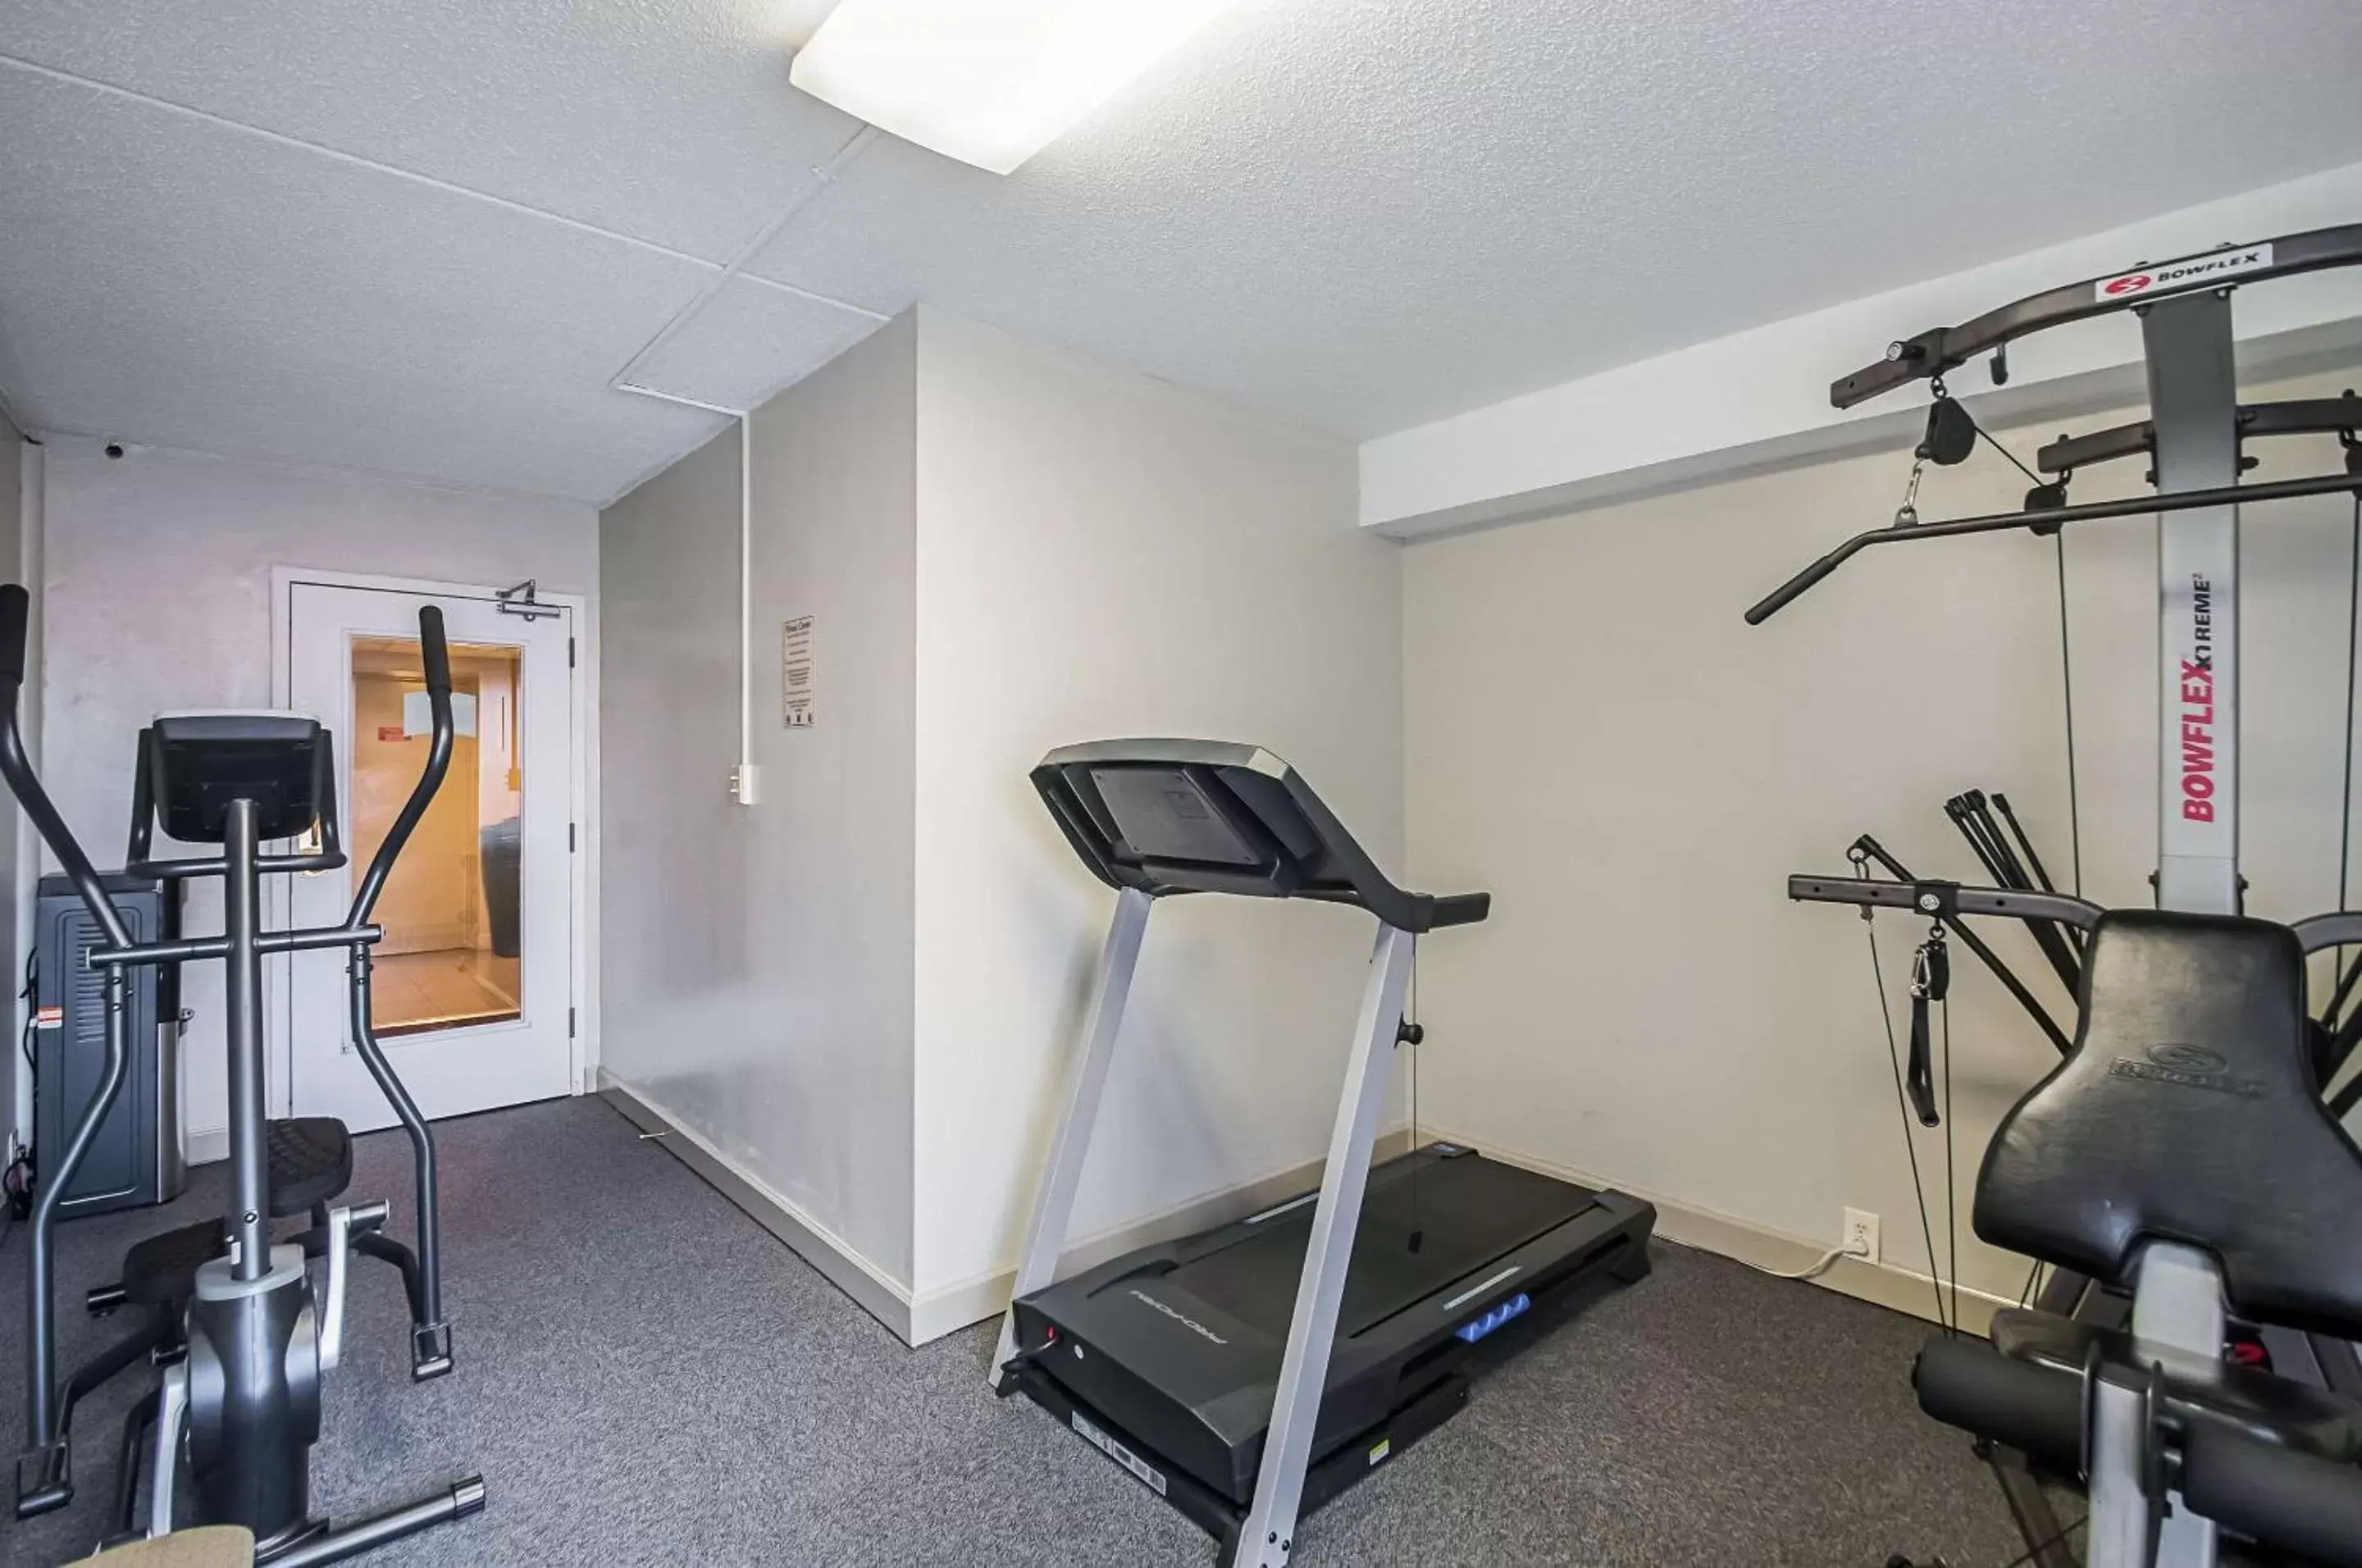 Fitness centre/facilities, Fitness Center/Facilities in Quality Inn near Potomac Mills